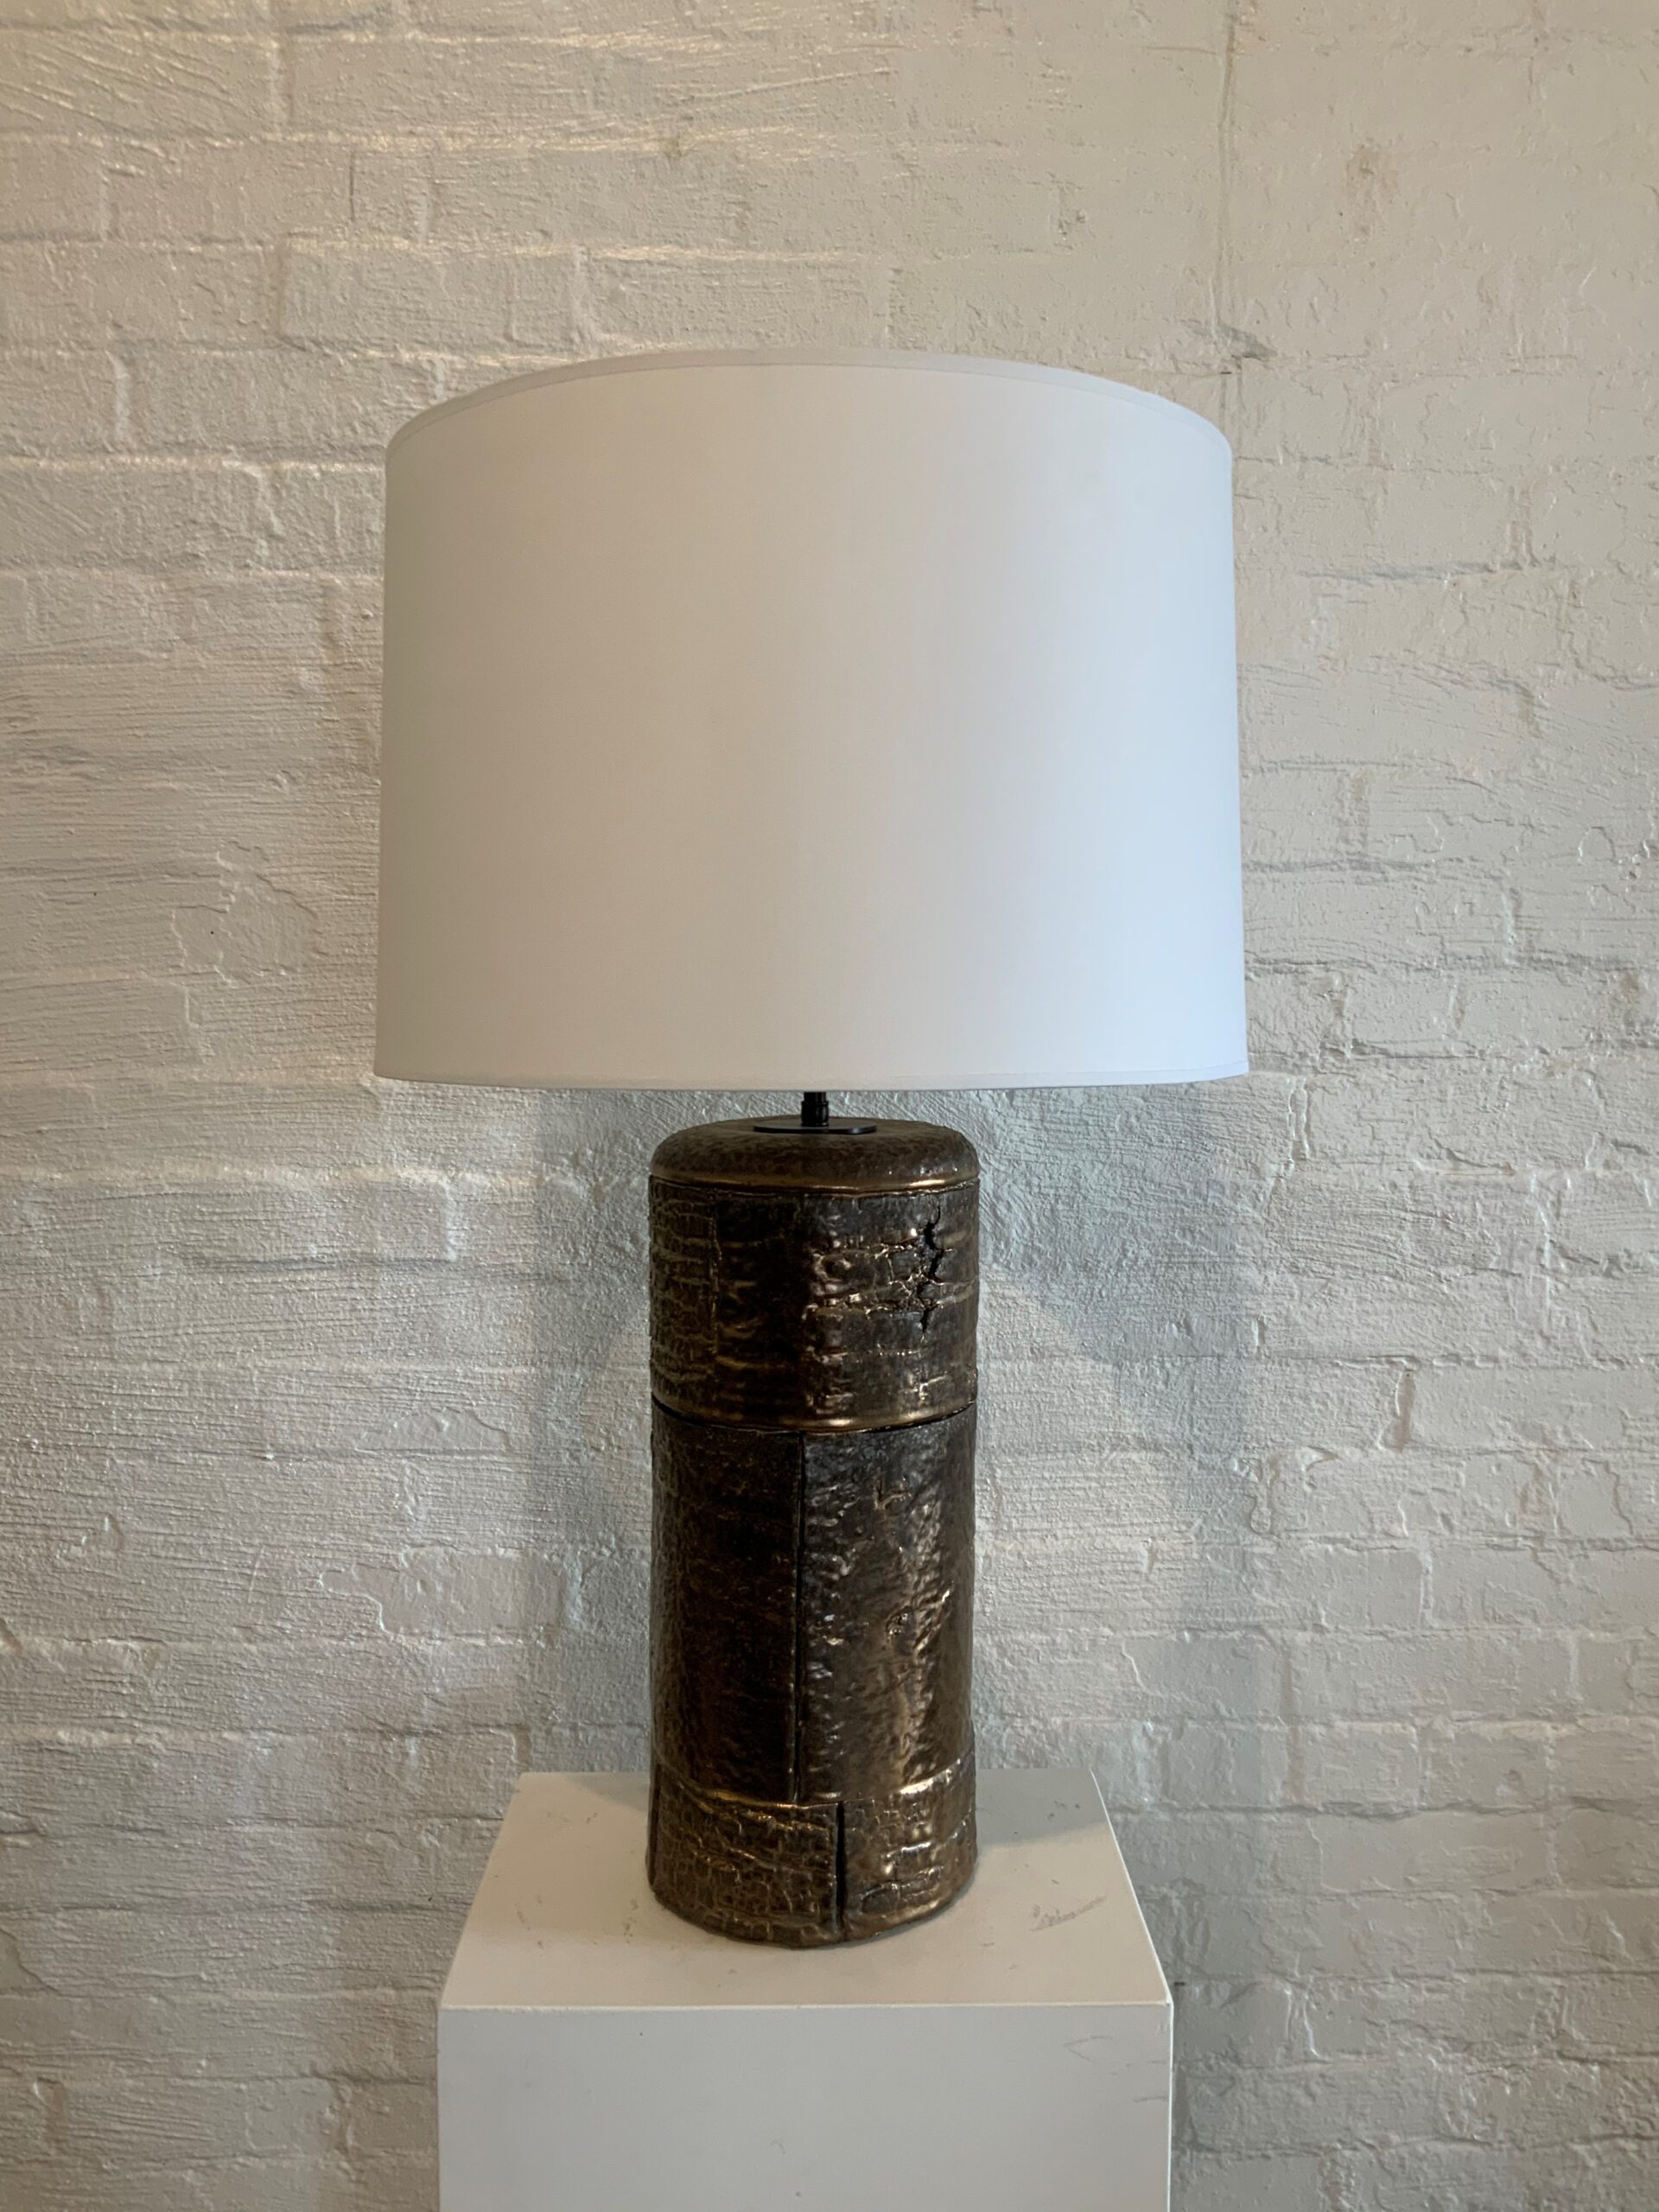 Peter Lane,  Bronze Birch Glazed Ceramic Table Lamp, 2019